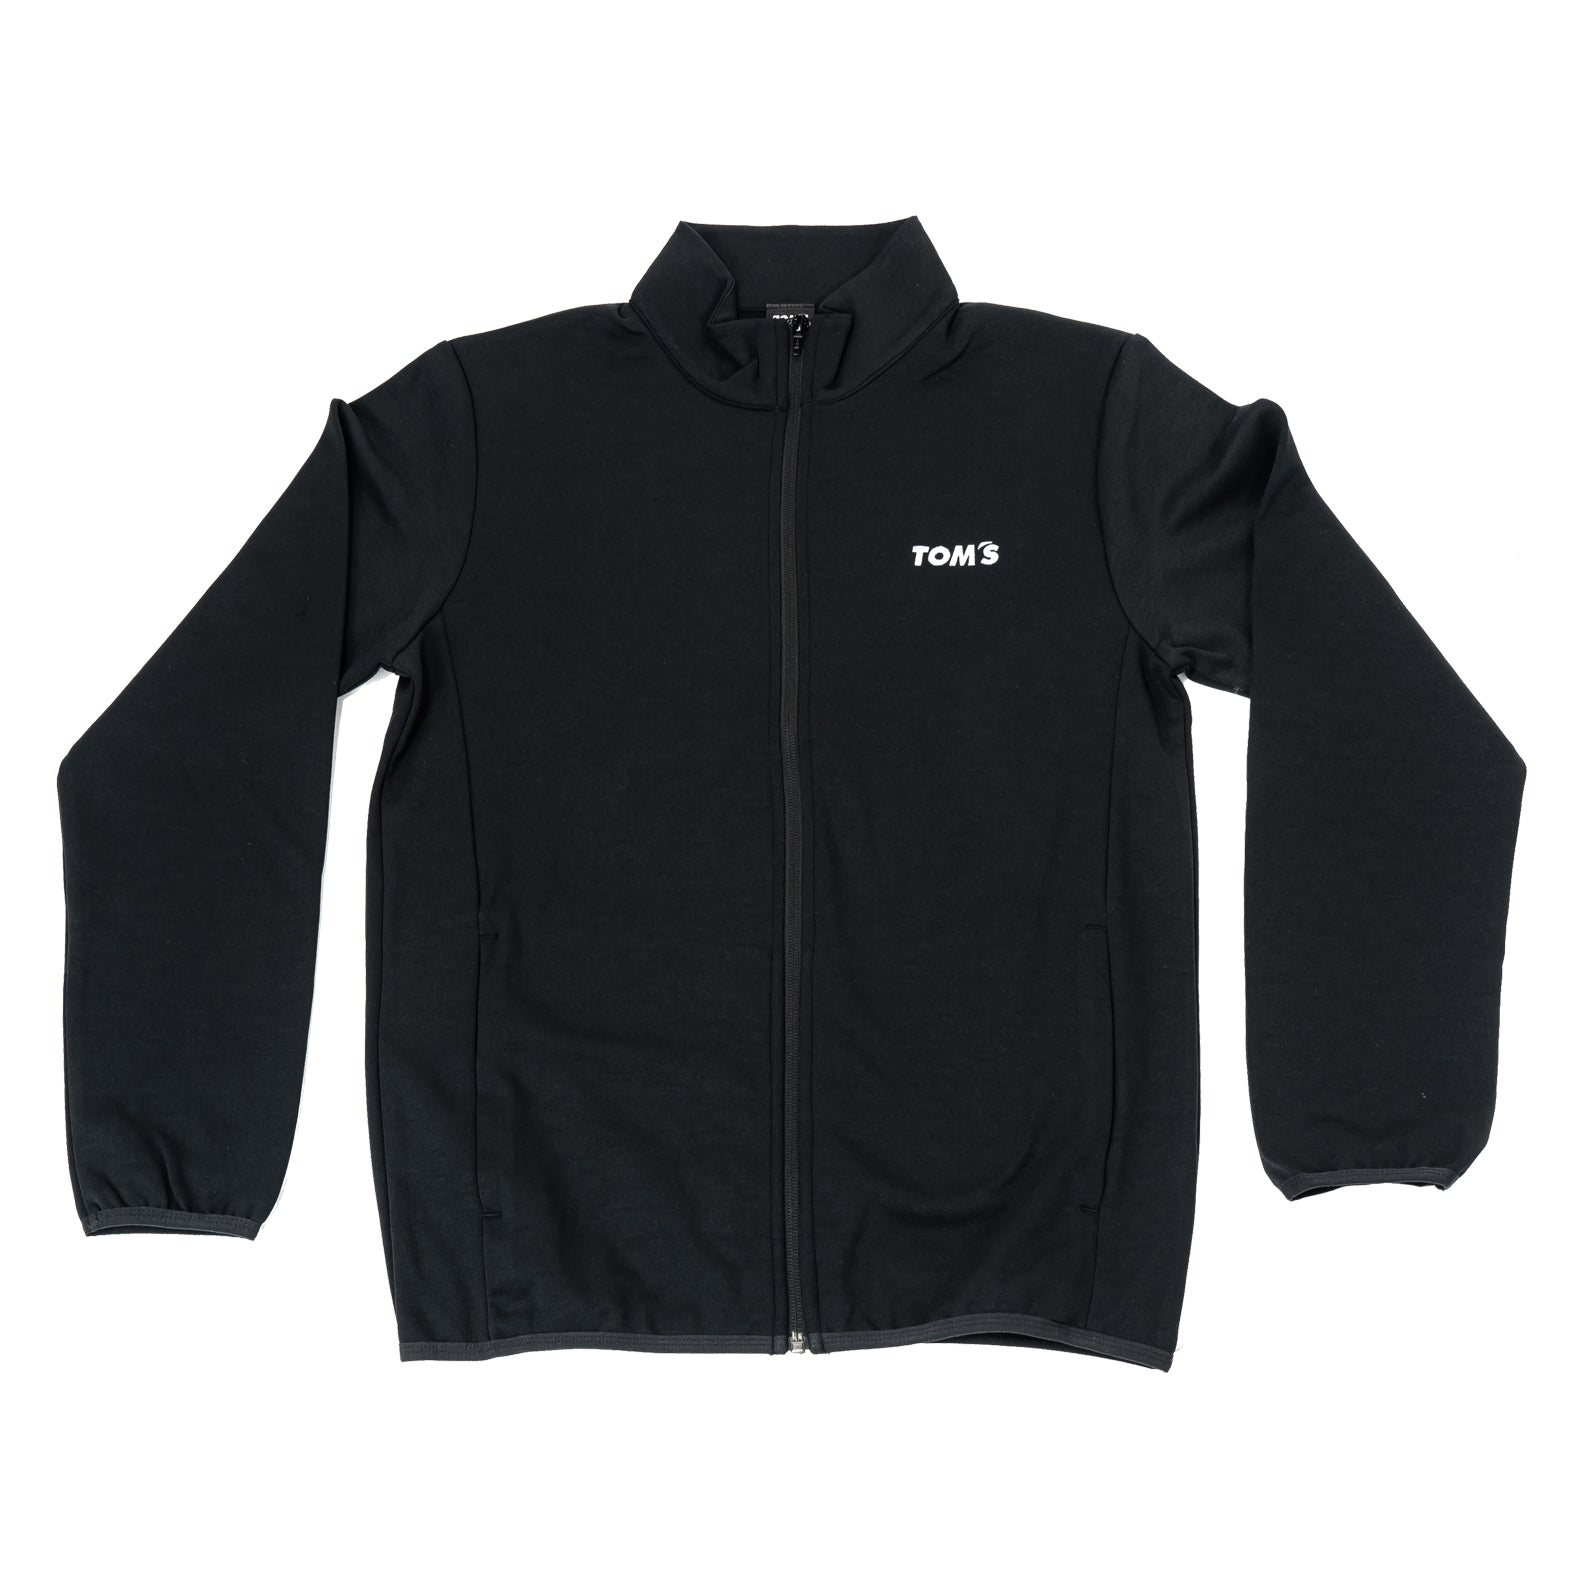 TOM'S Racing - Zip-Up Sports Jacket - Black | APEXi USA